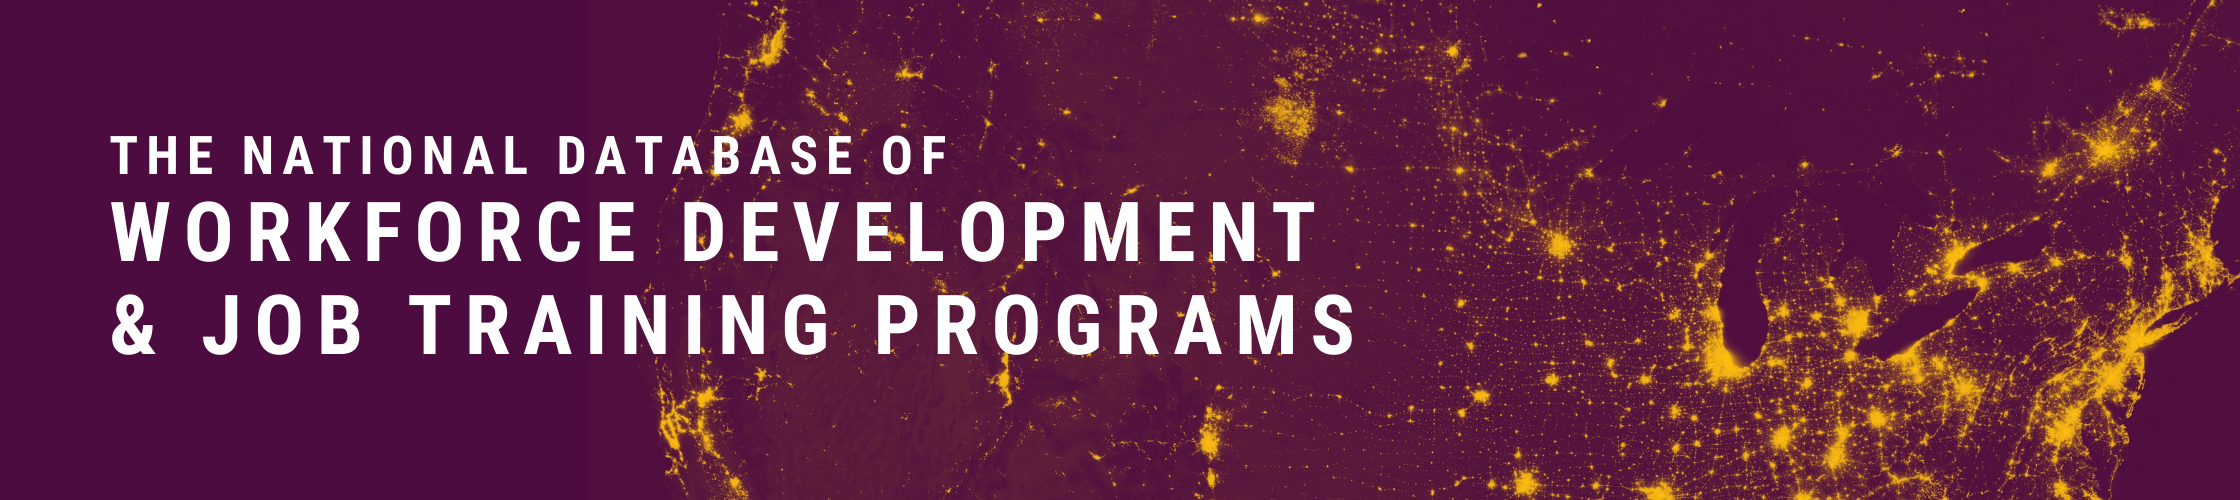 National Database of Workforce Development & Job Training Programs